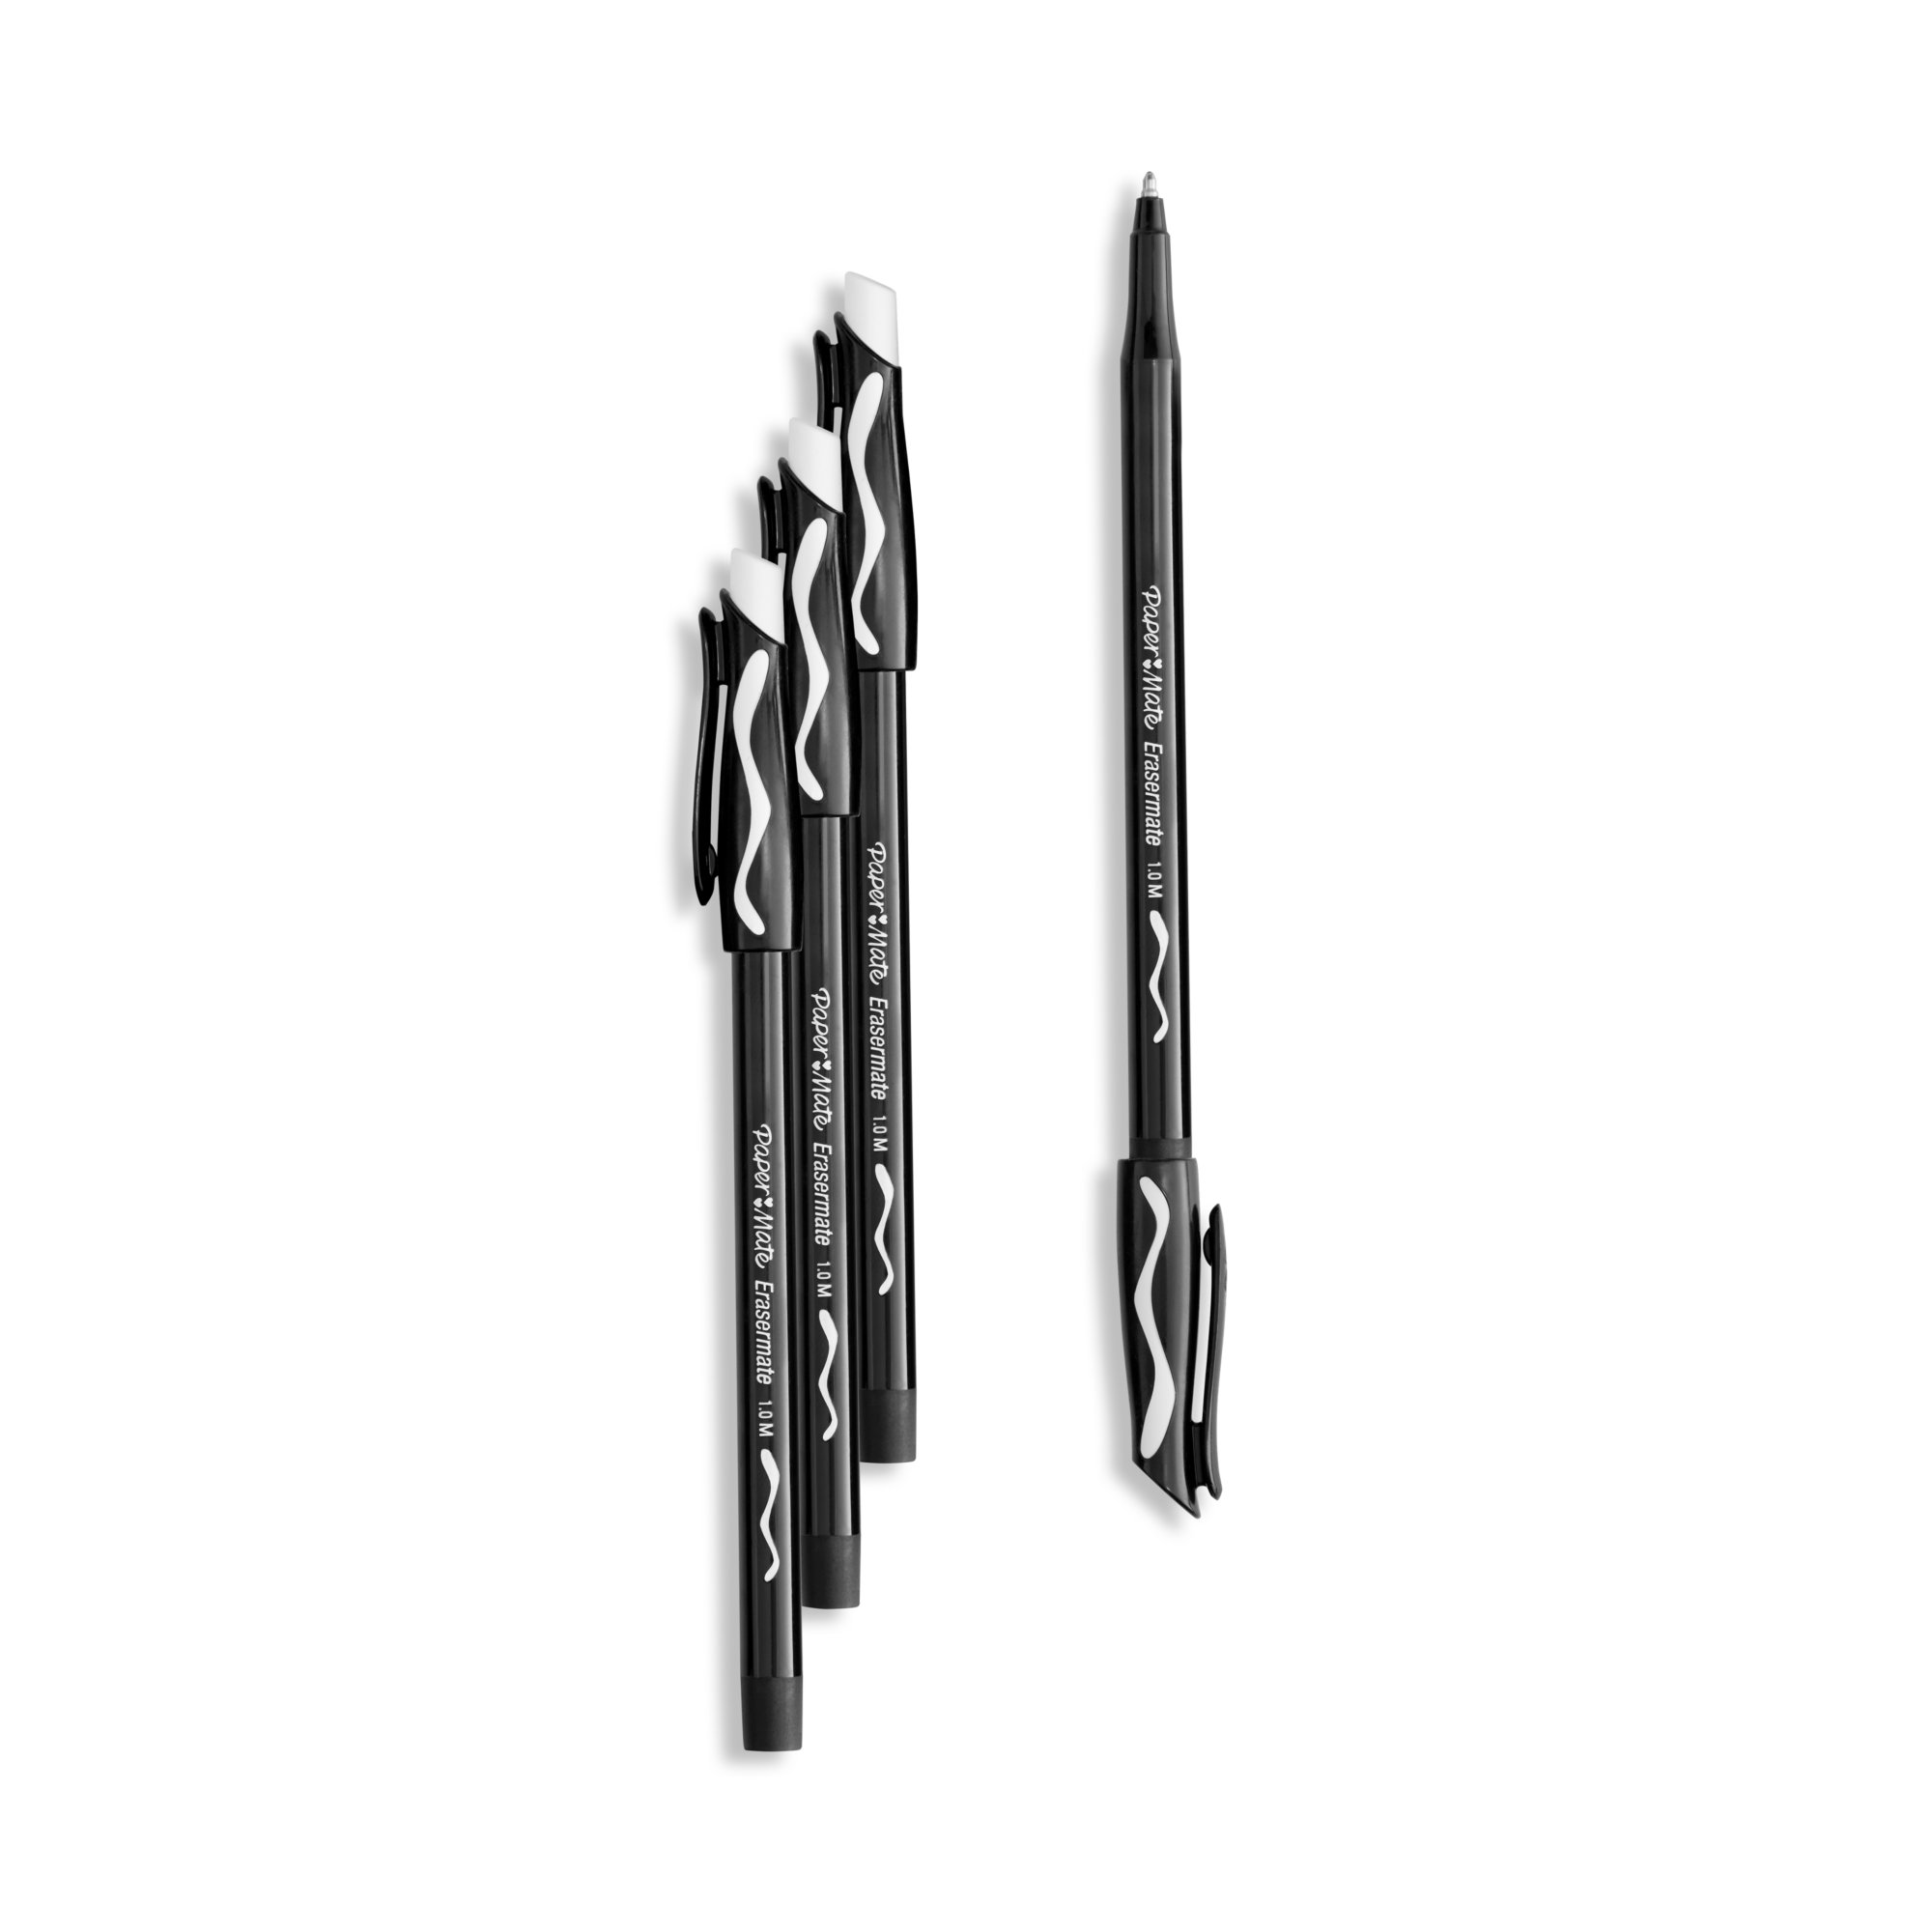 Paper Mate® Eraser Mate® Medium Point Erasable Ballpoint Pens - Black, 4 pk  - Kroger